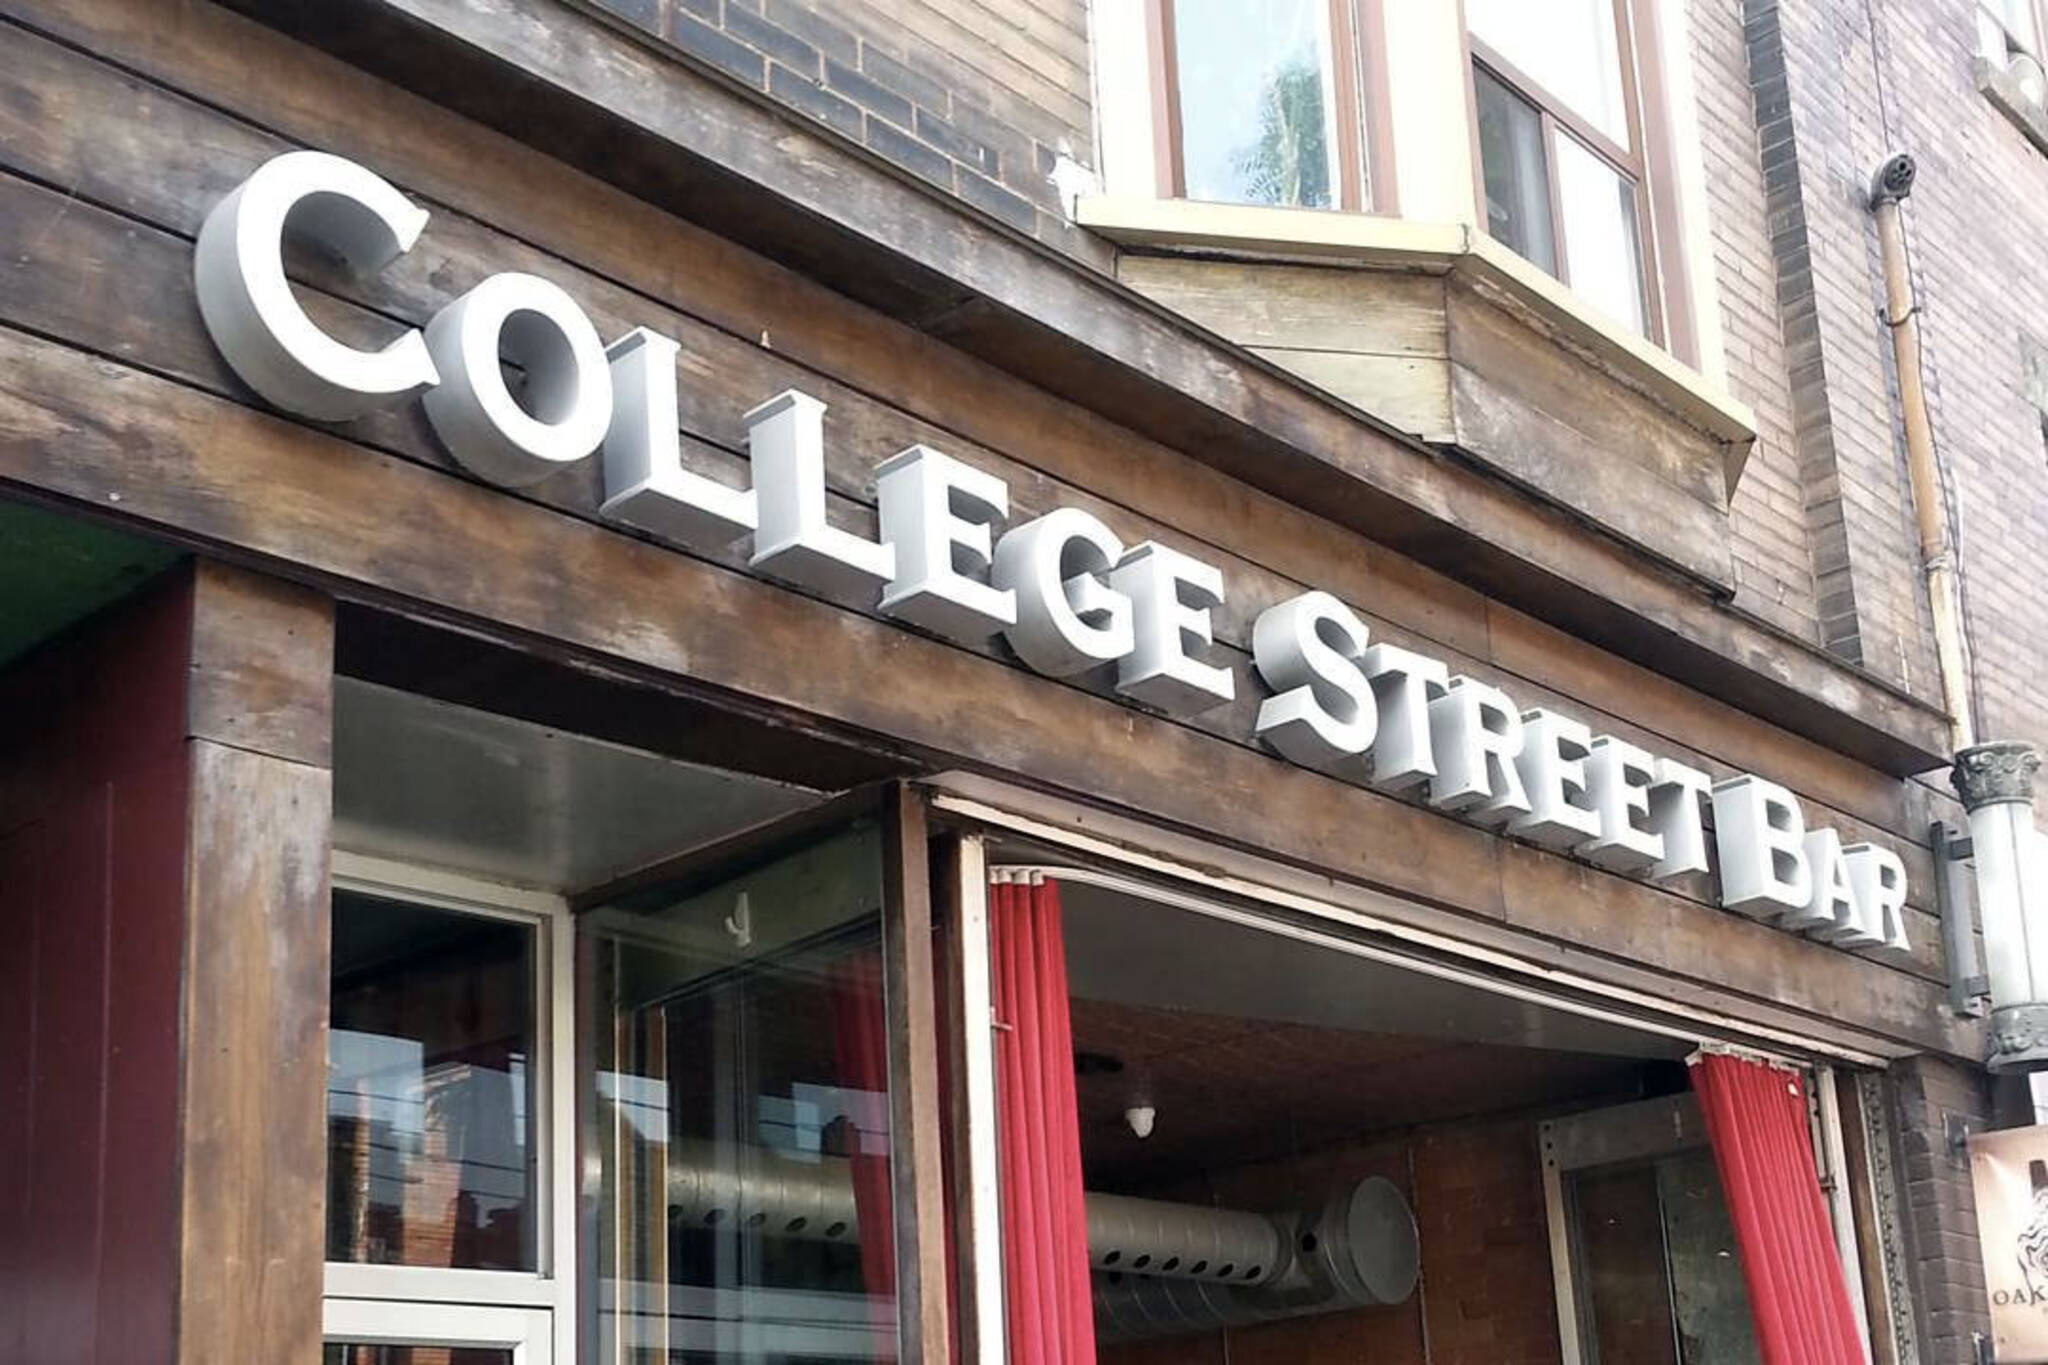 college street bar